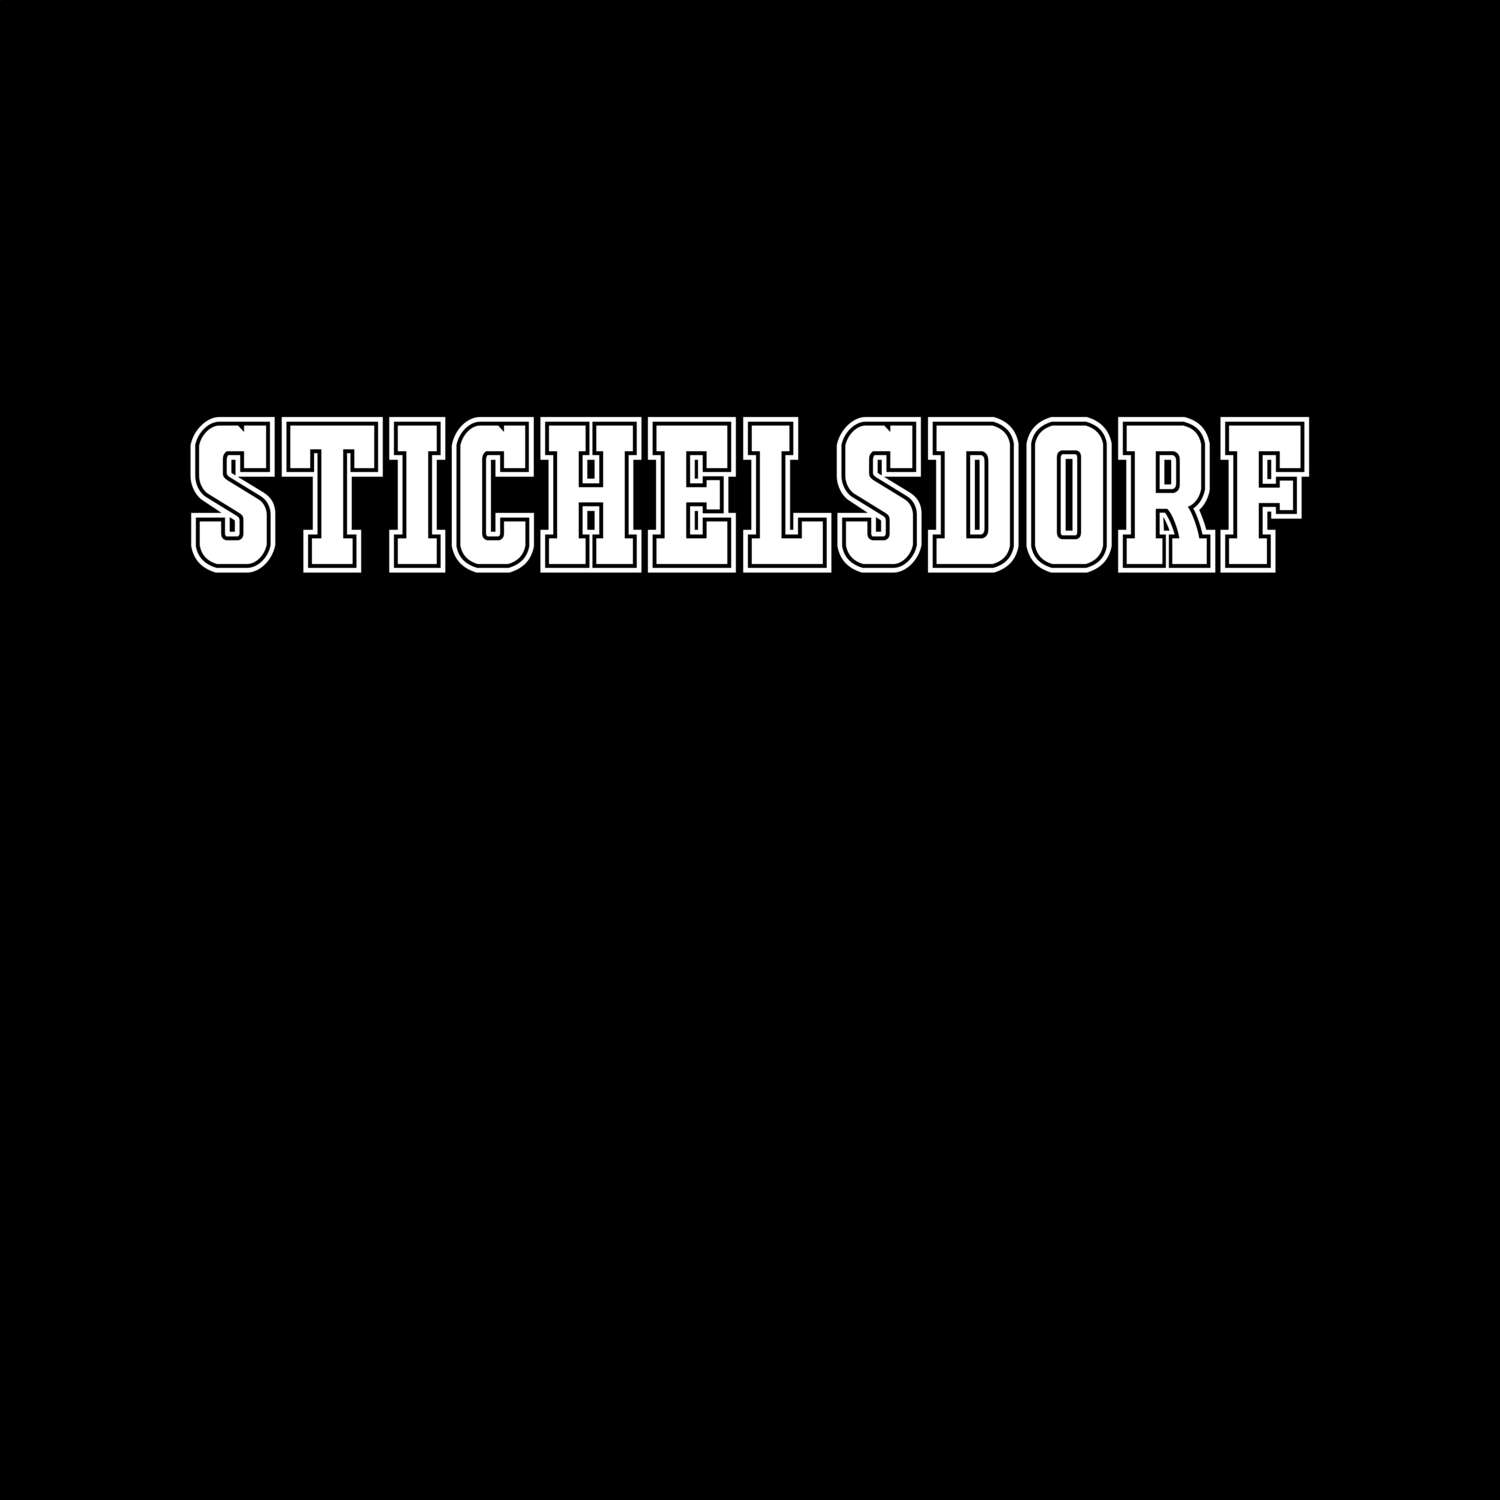 Stichelsdorf T-Shirt »Classic«